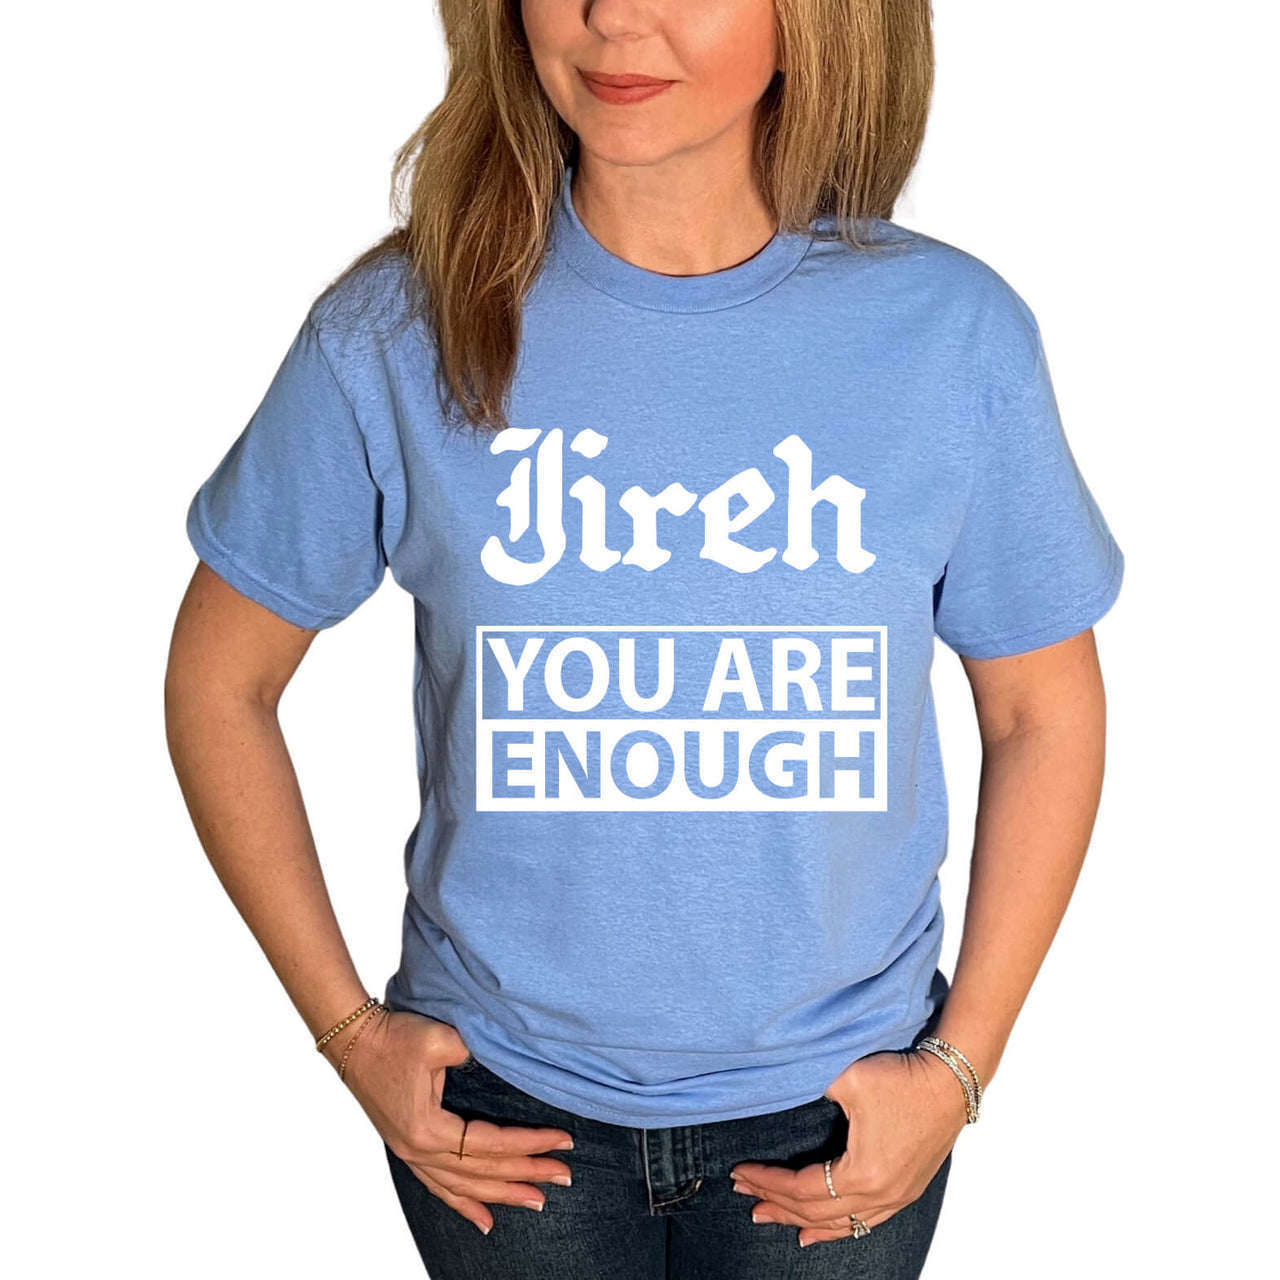 Jireh You Are Enough T-Shirt